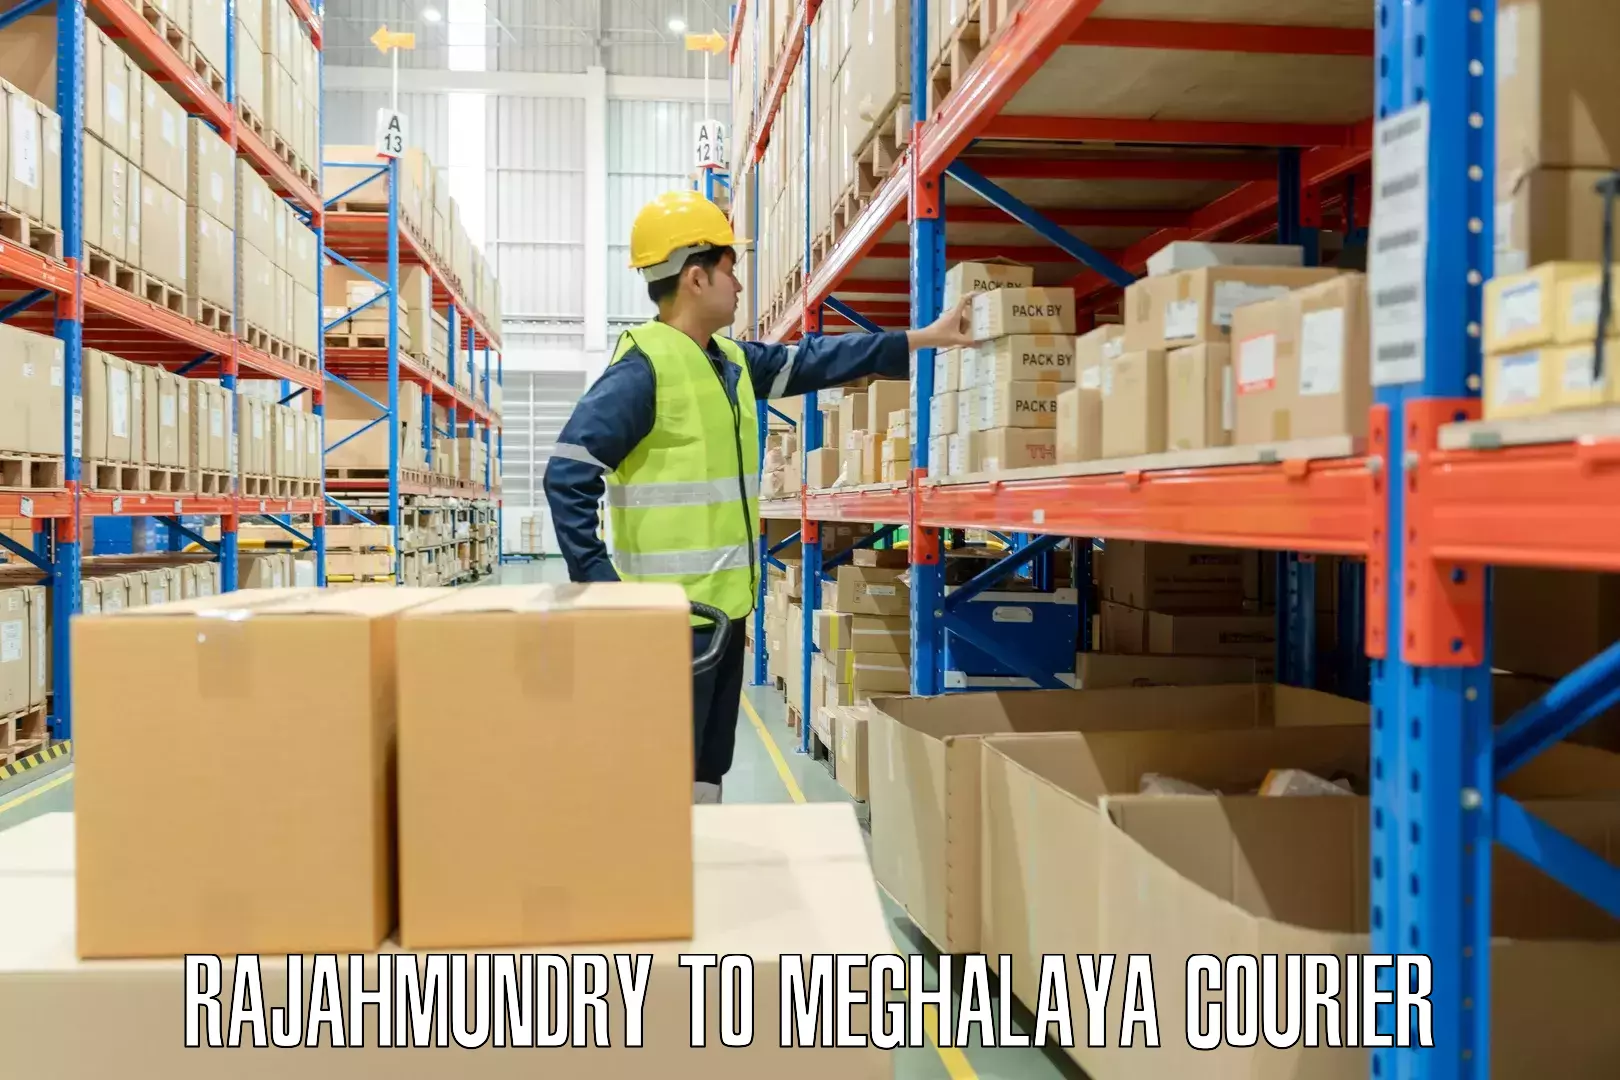 Luggage delivery app Rajahmundry to Meghalaya